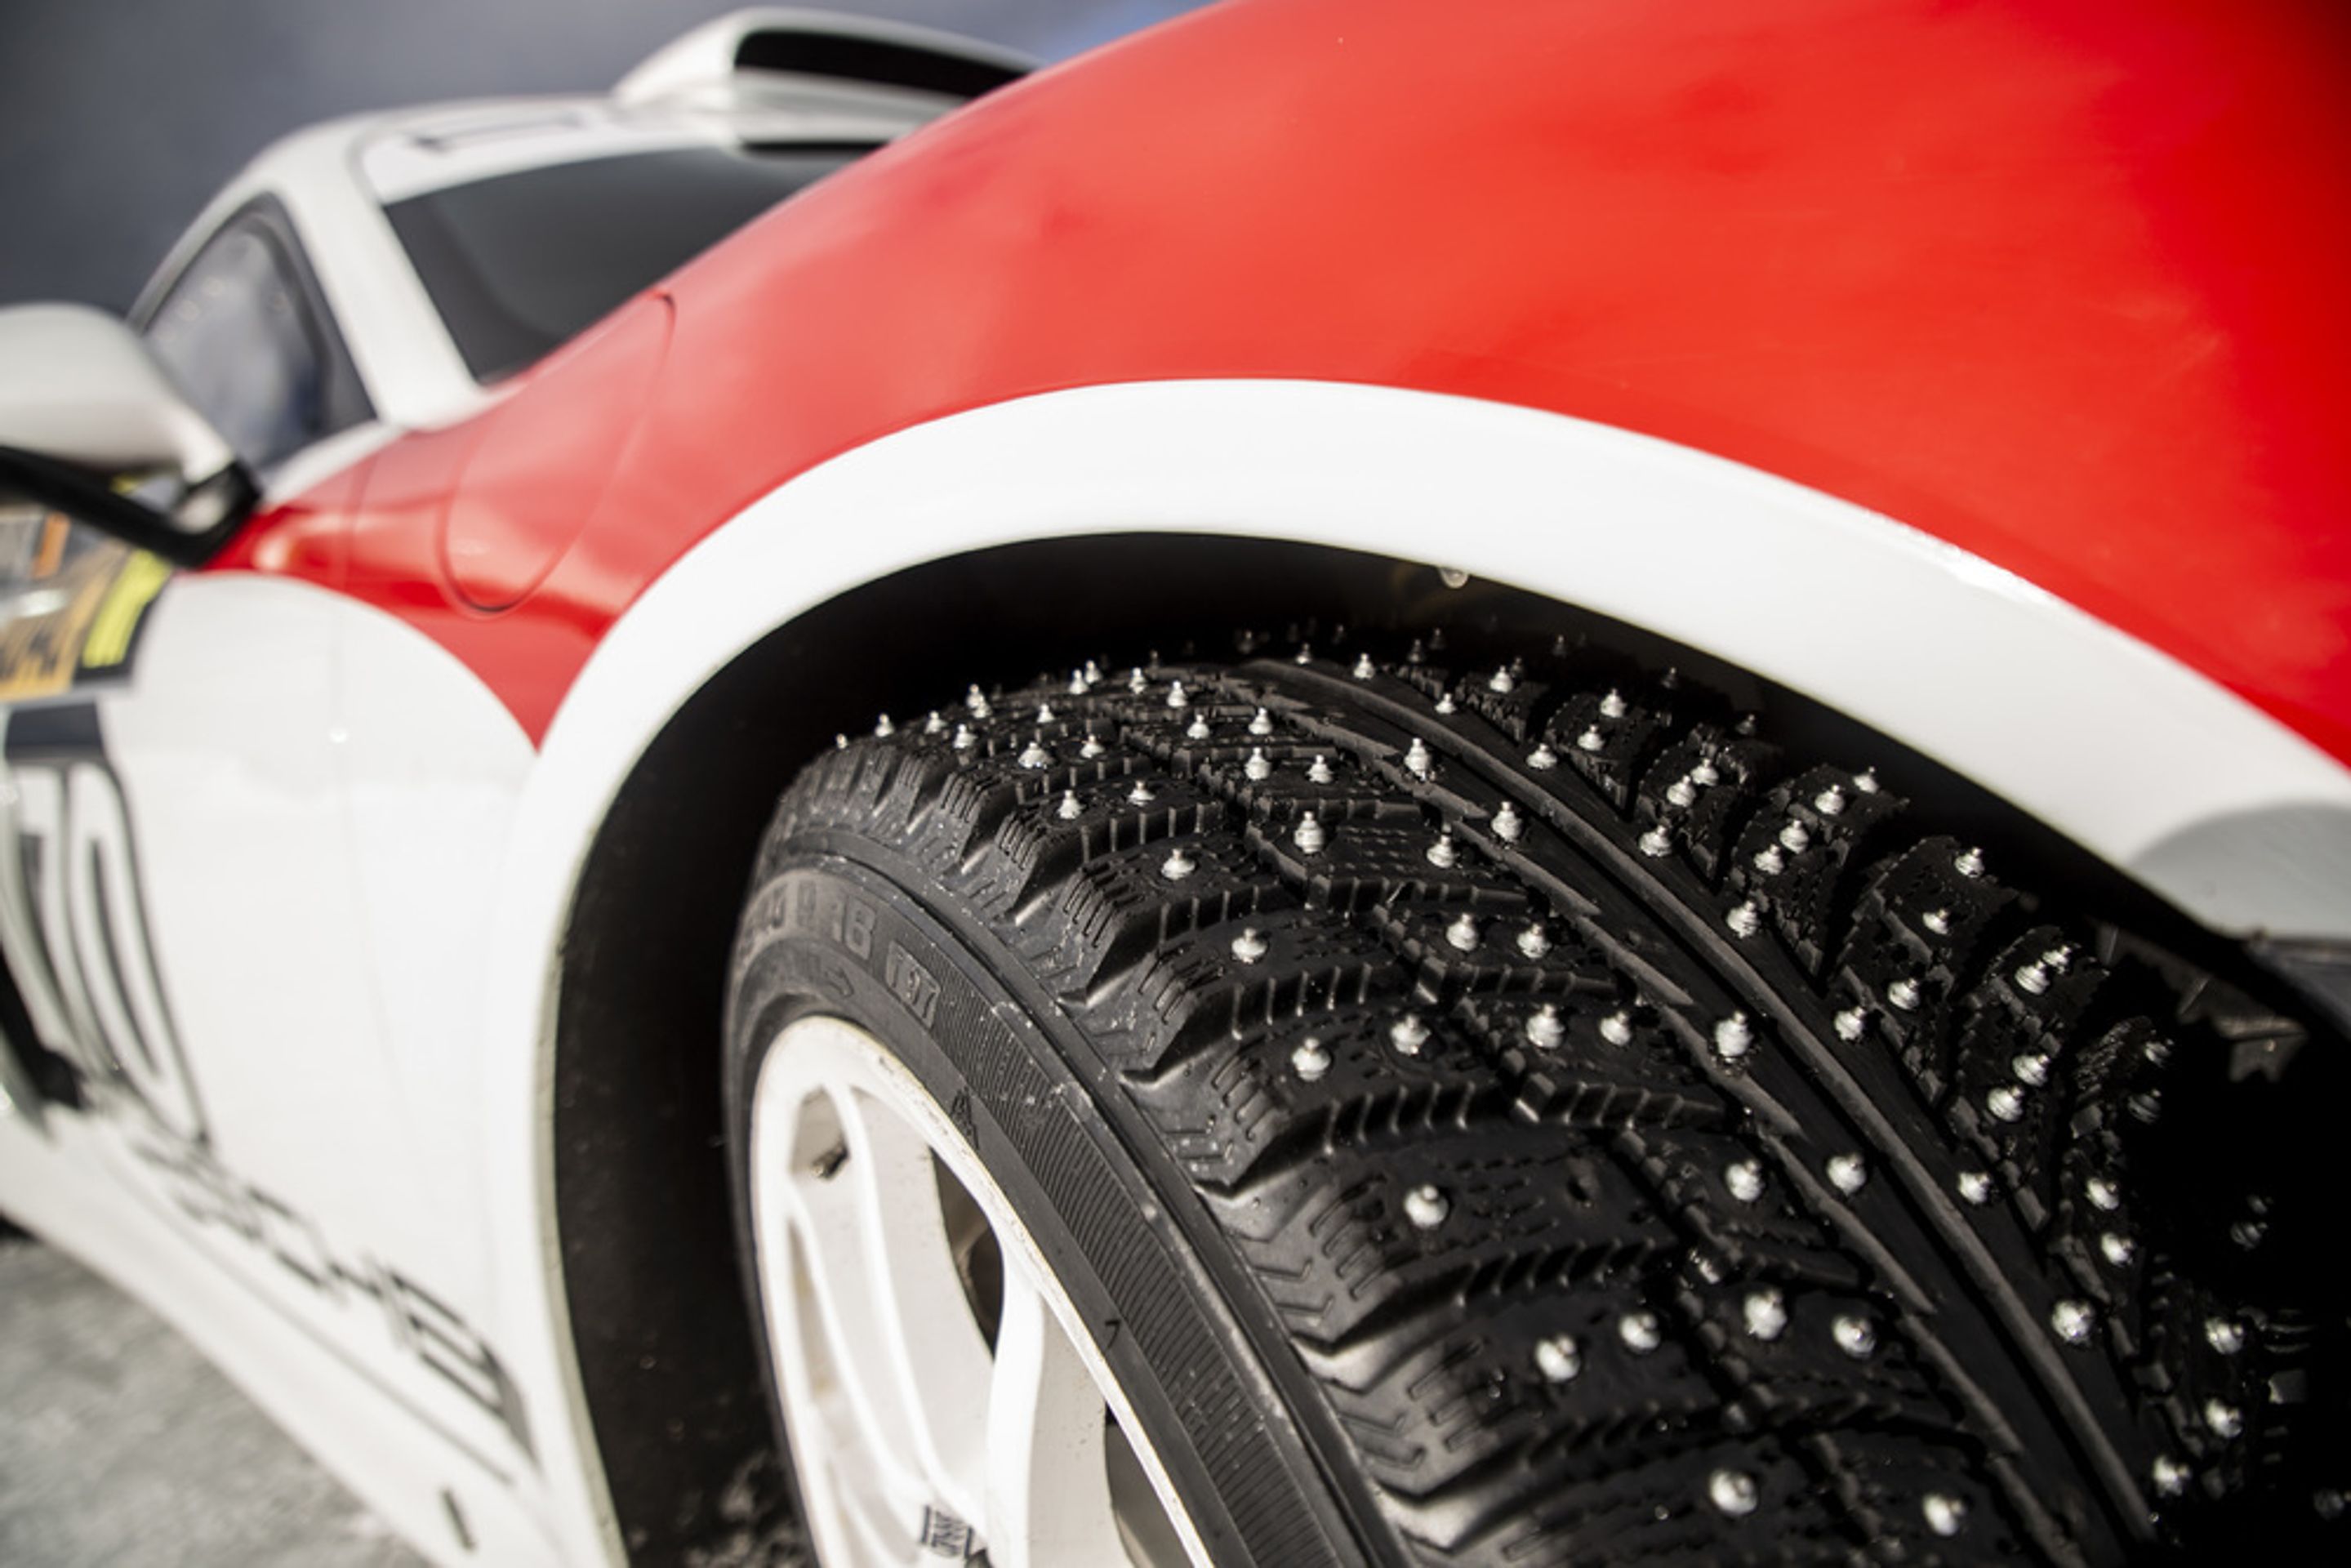 Porsche Cayman GT4 Rallye - 19 - Fotogalerie: Koncept závodního Porsche Cayman GT4 (3/11)